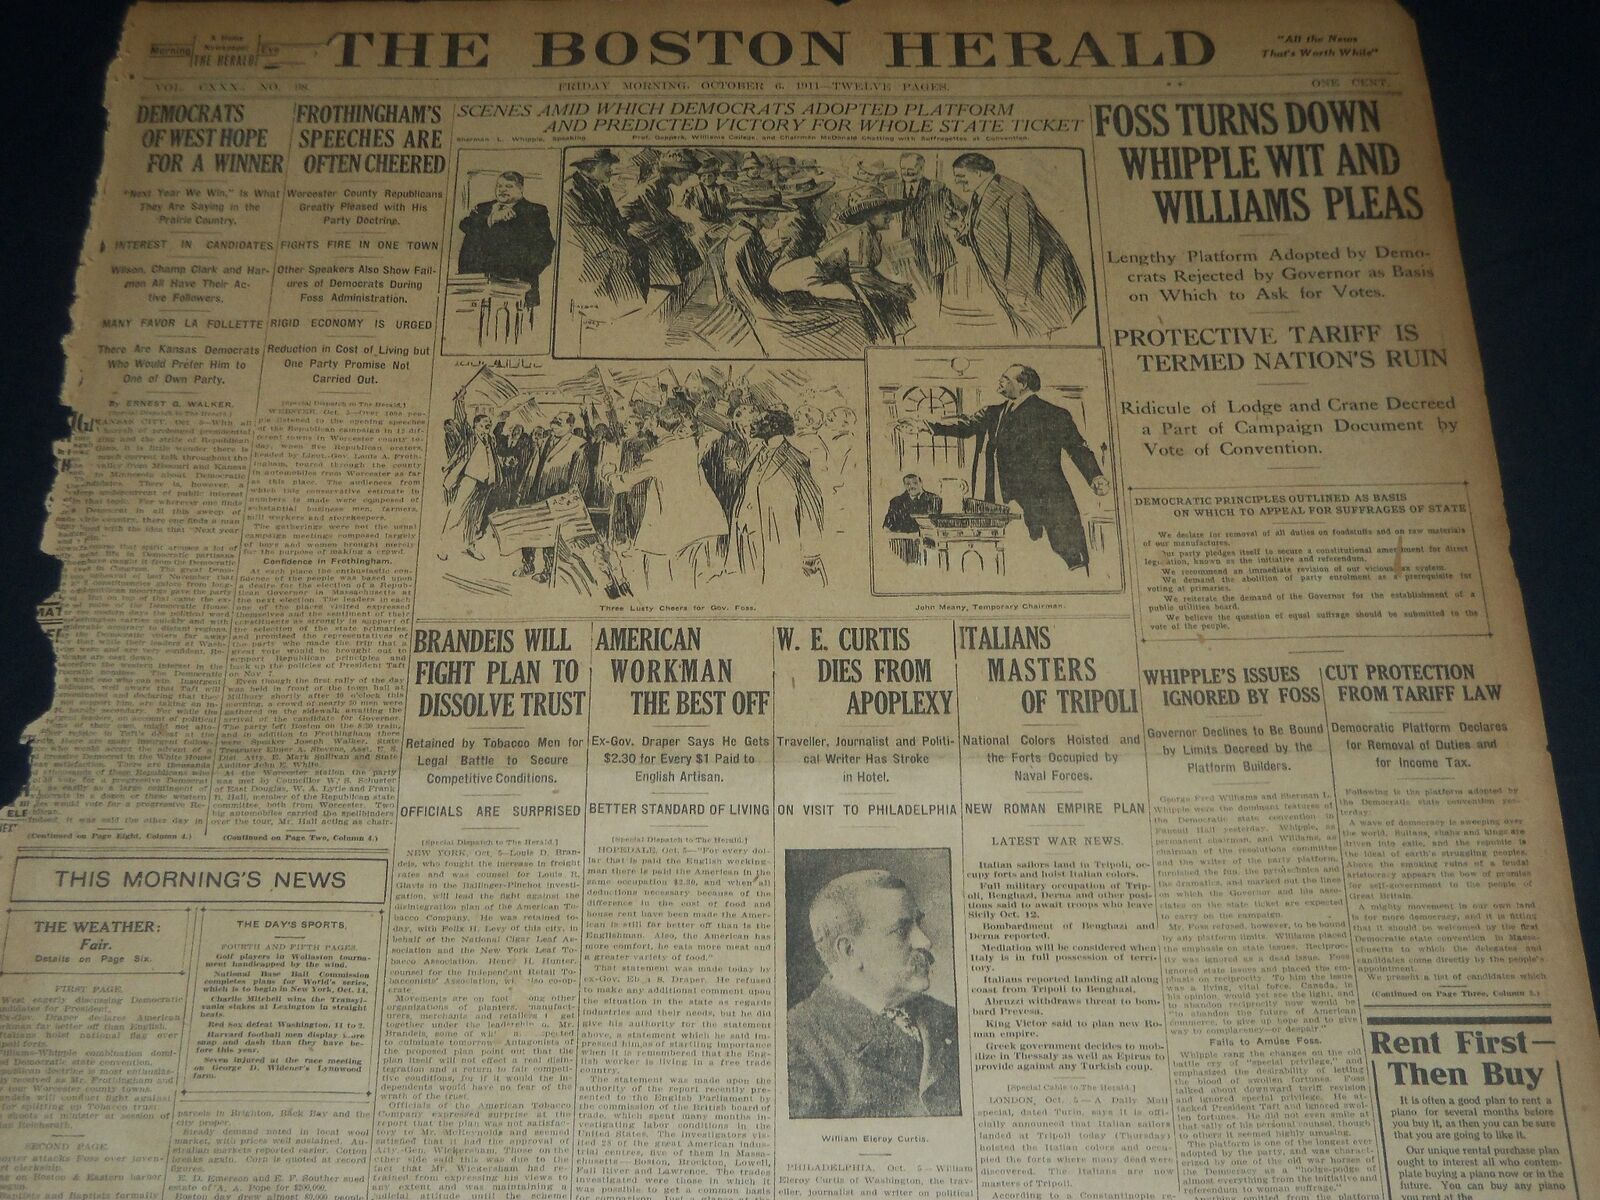 1911 OCTOBER 6 THE BOSTON HERALD - BRANDEIS WILL FIGHT TO DISSOLVE TRUST- BH 180